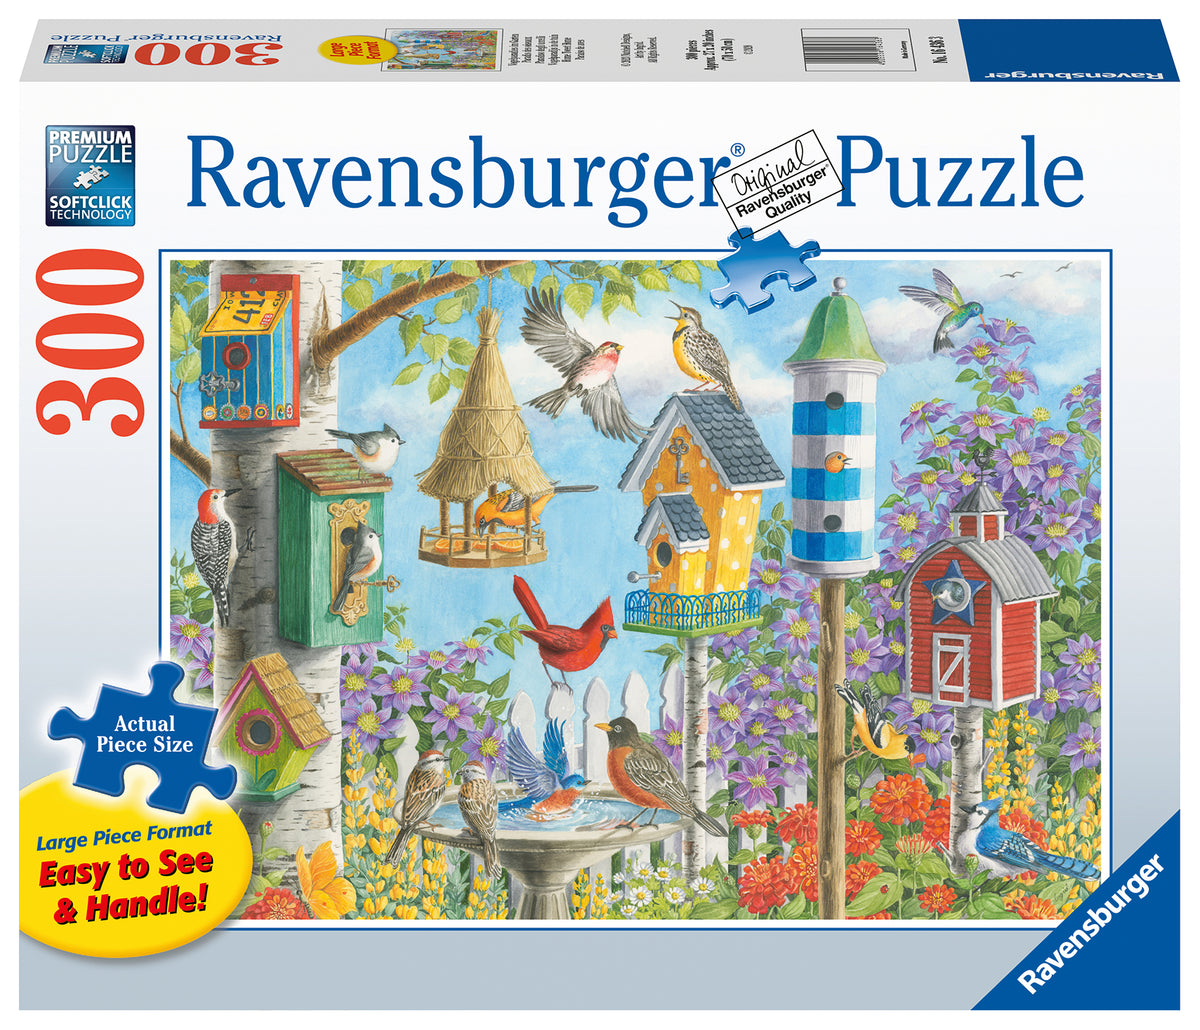 Ravensburger Premium Puzzle 300 Pieces 27x 20 Complete Puzzle. See  Pictures